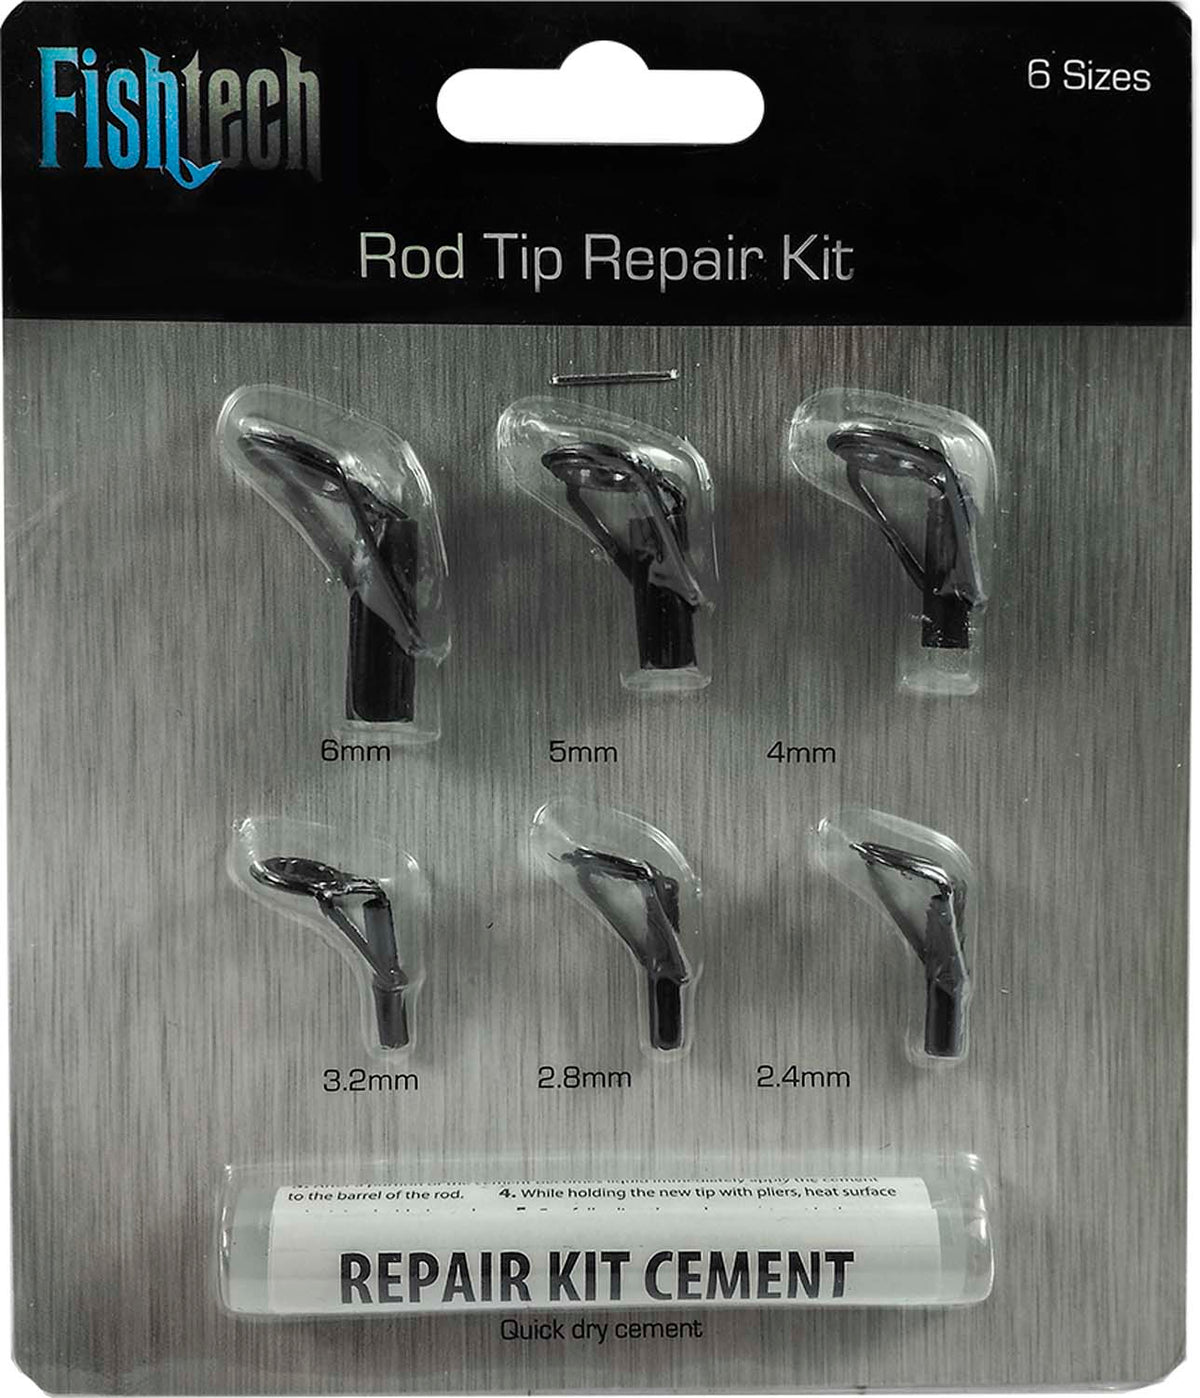 Fishtech Rod Tip Repair Kit — LX2001 - Homewares, Outdoor, Phone  Accessories, Cases, Speakers, Headphones + More